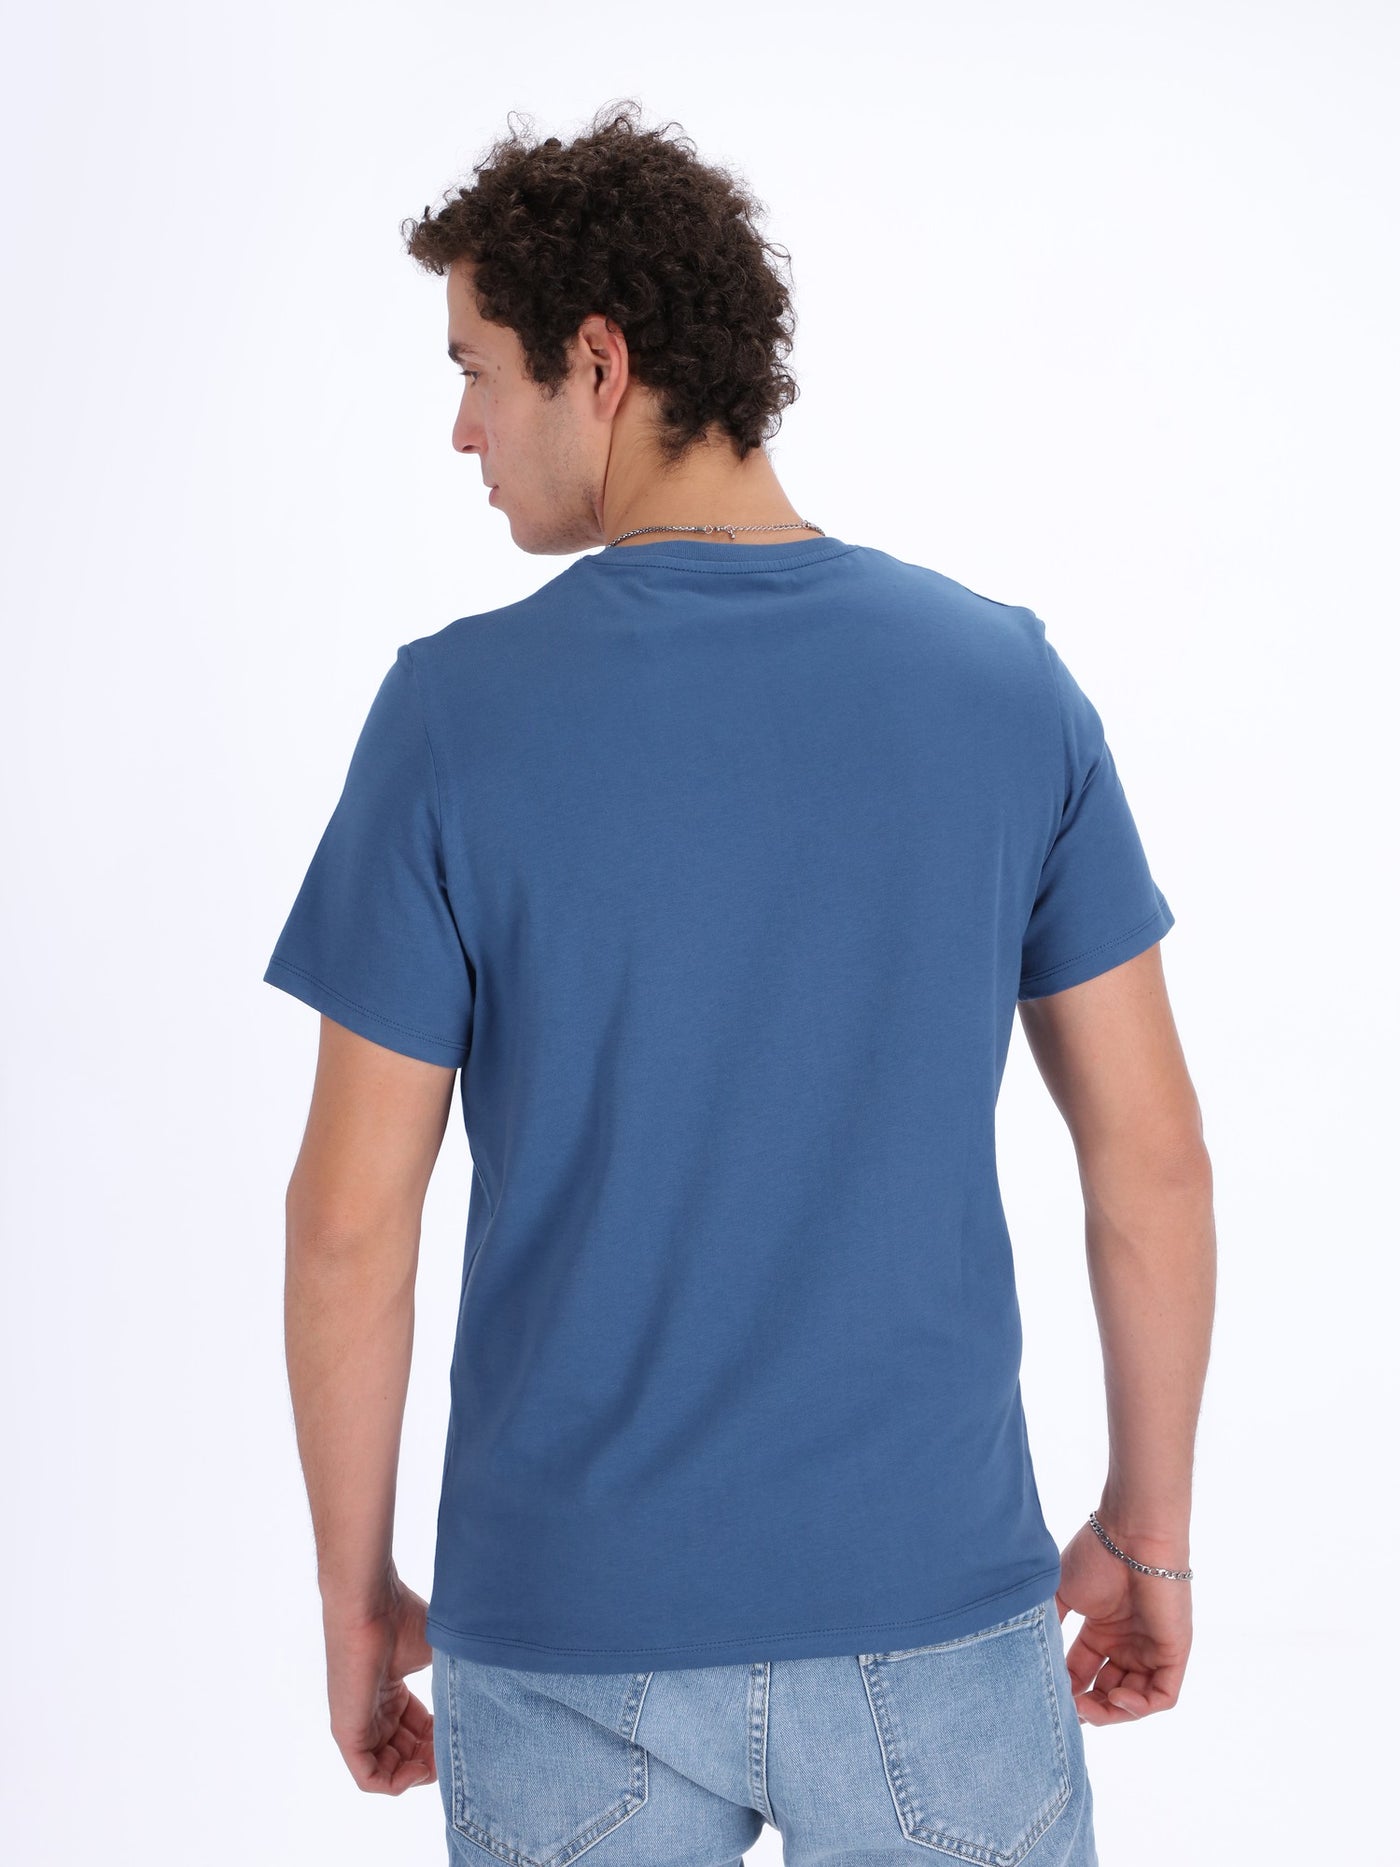 O'Zone Men's Basic Round Neck T-Shirt